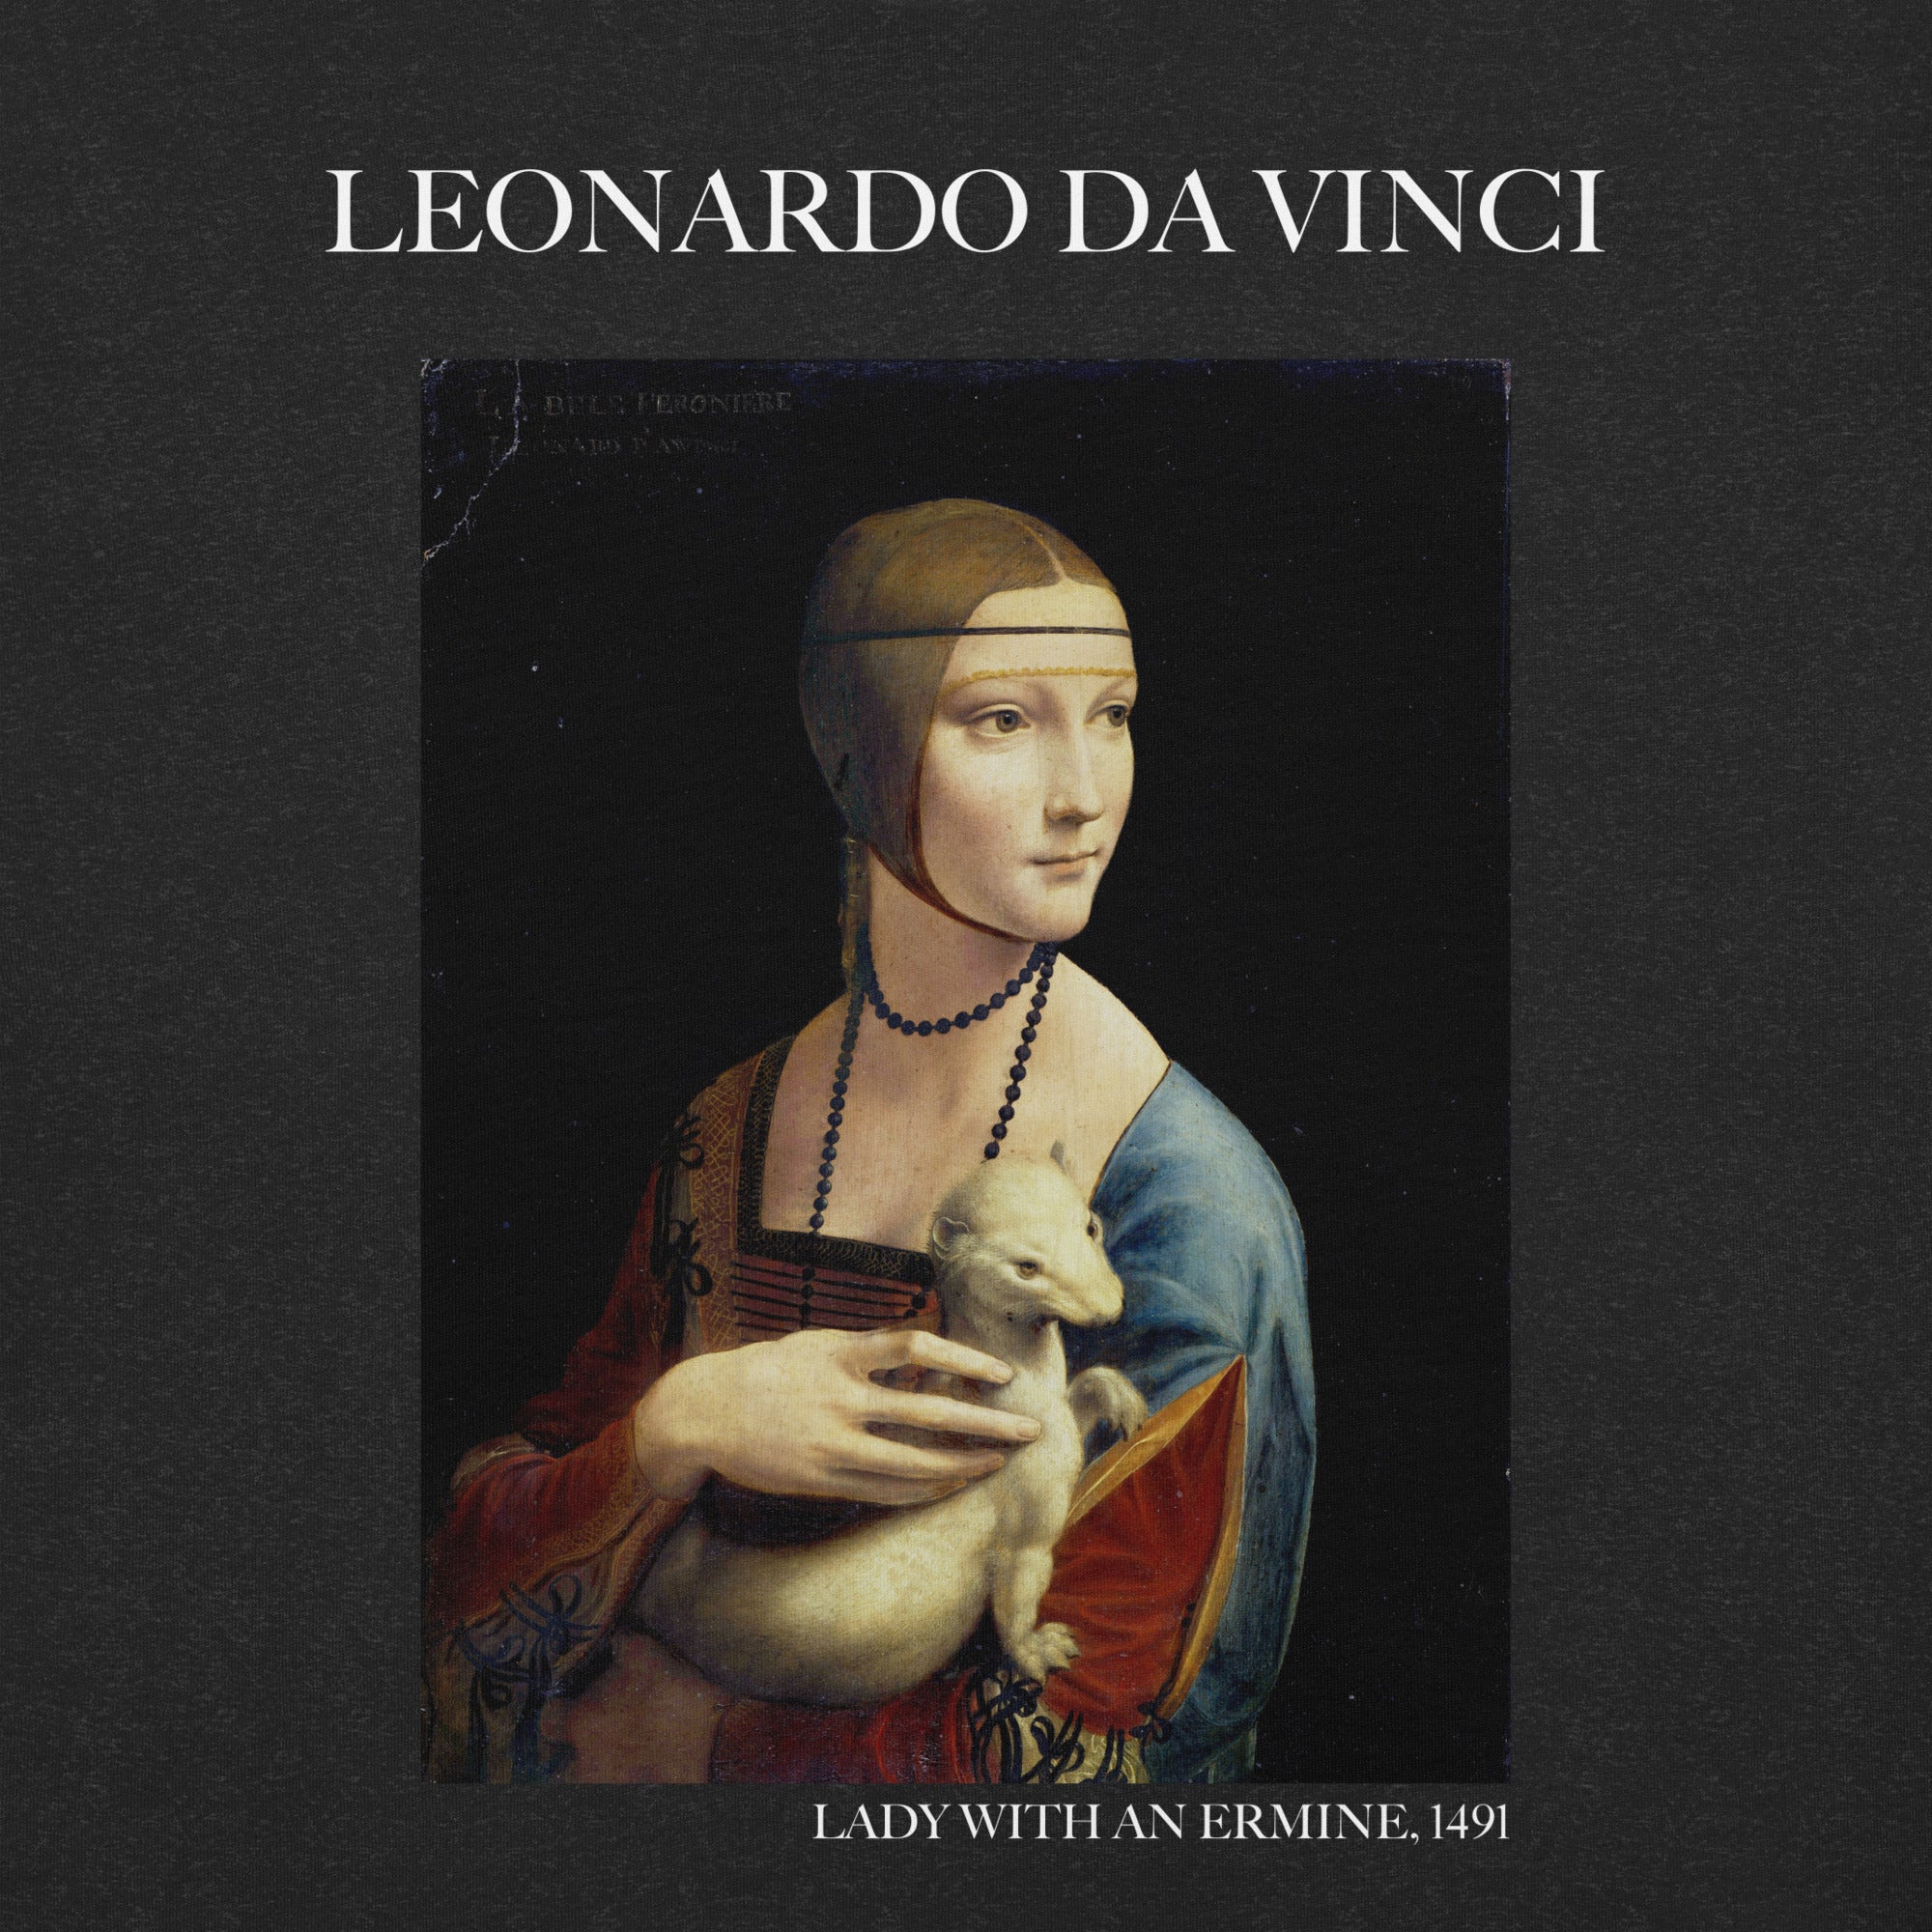 Leonardo da Vinci 'Lady with an Ermine' Famous Painting T-Shirt | Unisex Classic Art Tee